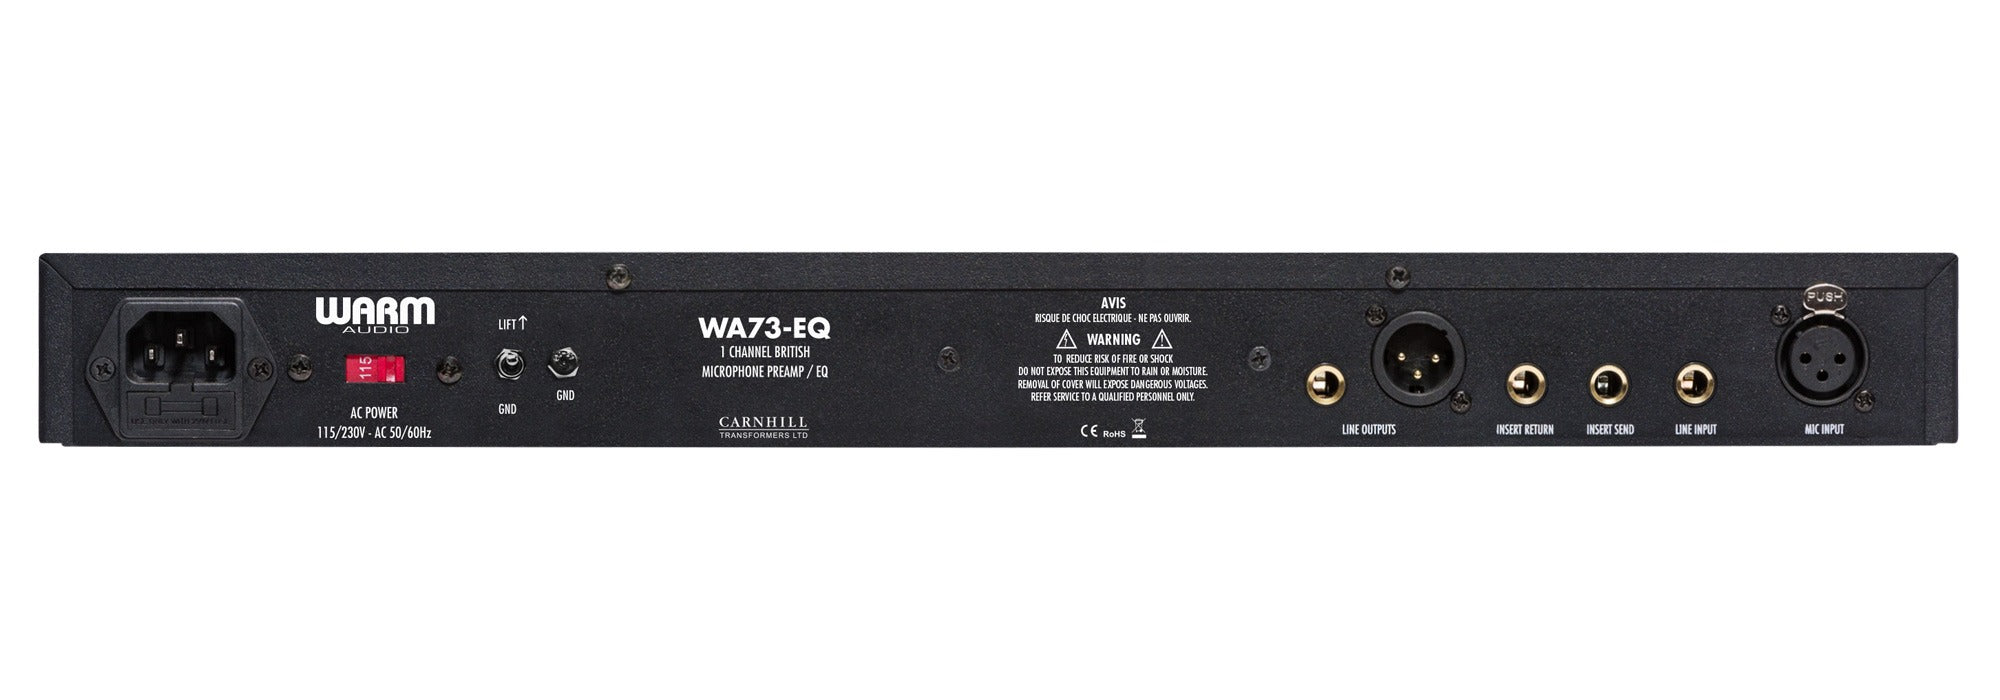 WARM AUDIO WA73-EQ MICROPHONE PREAMP AND EQ